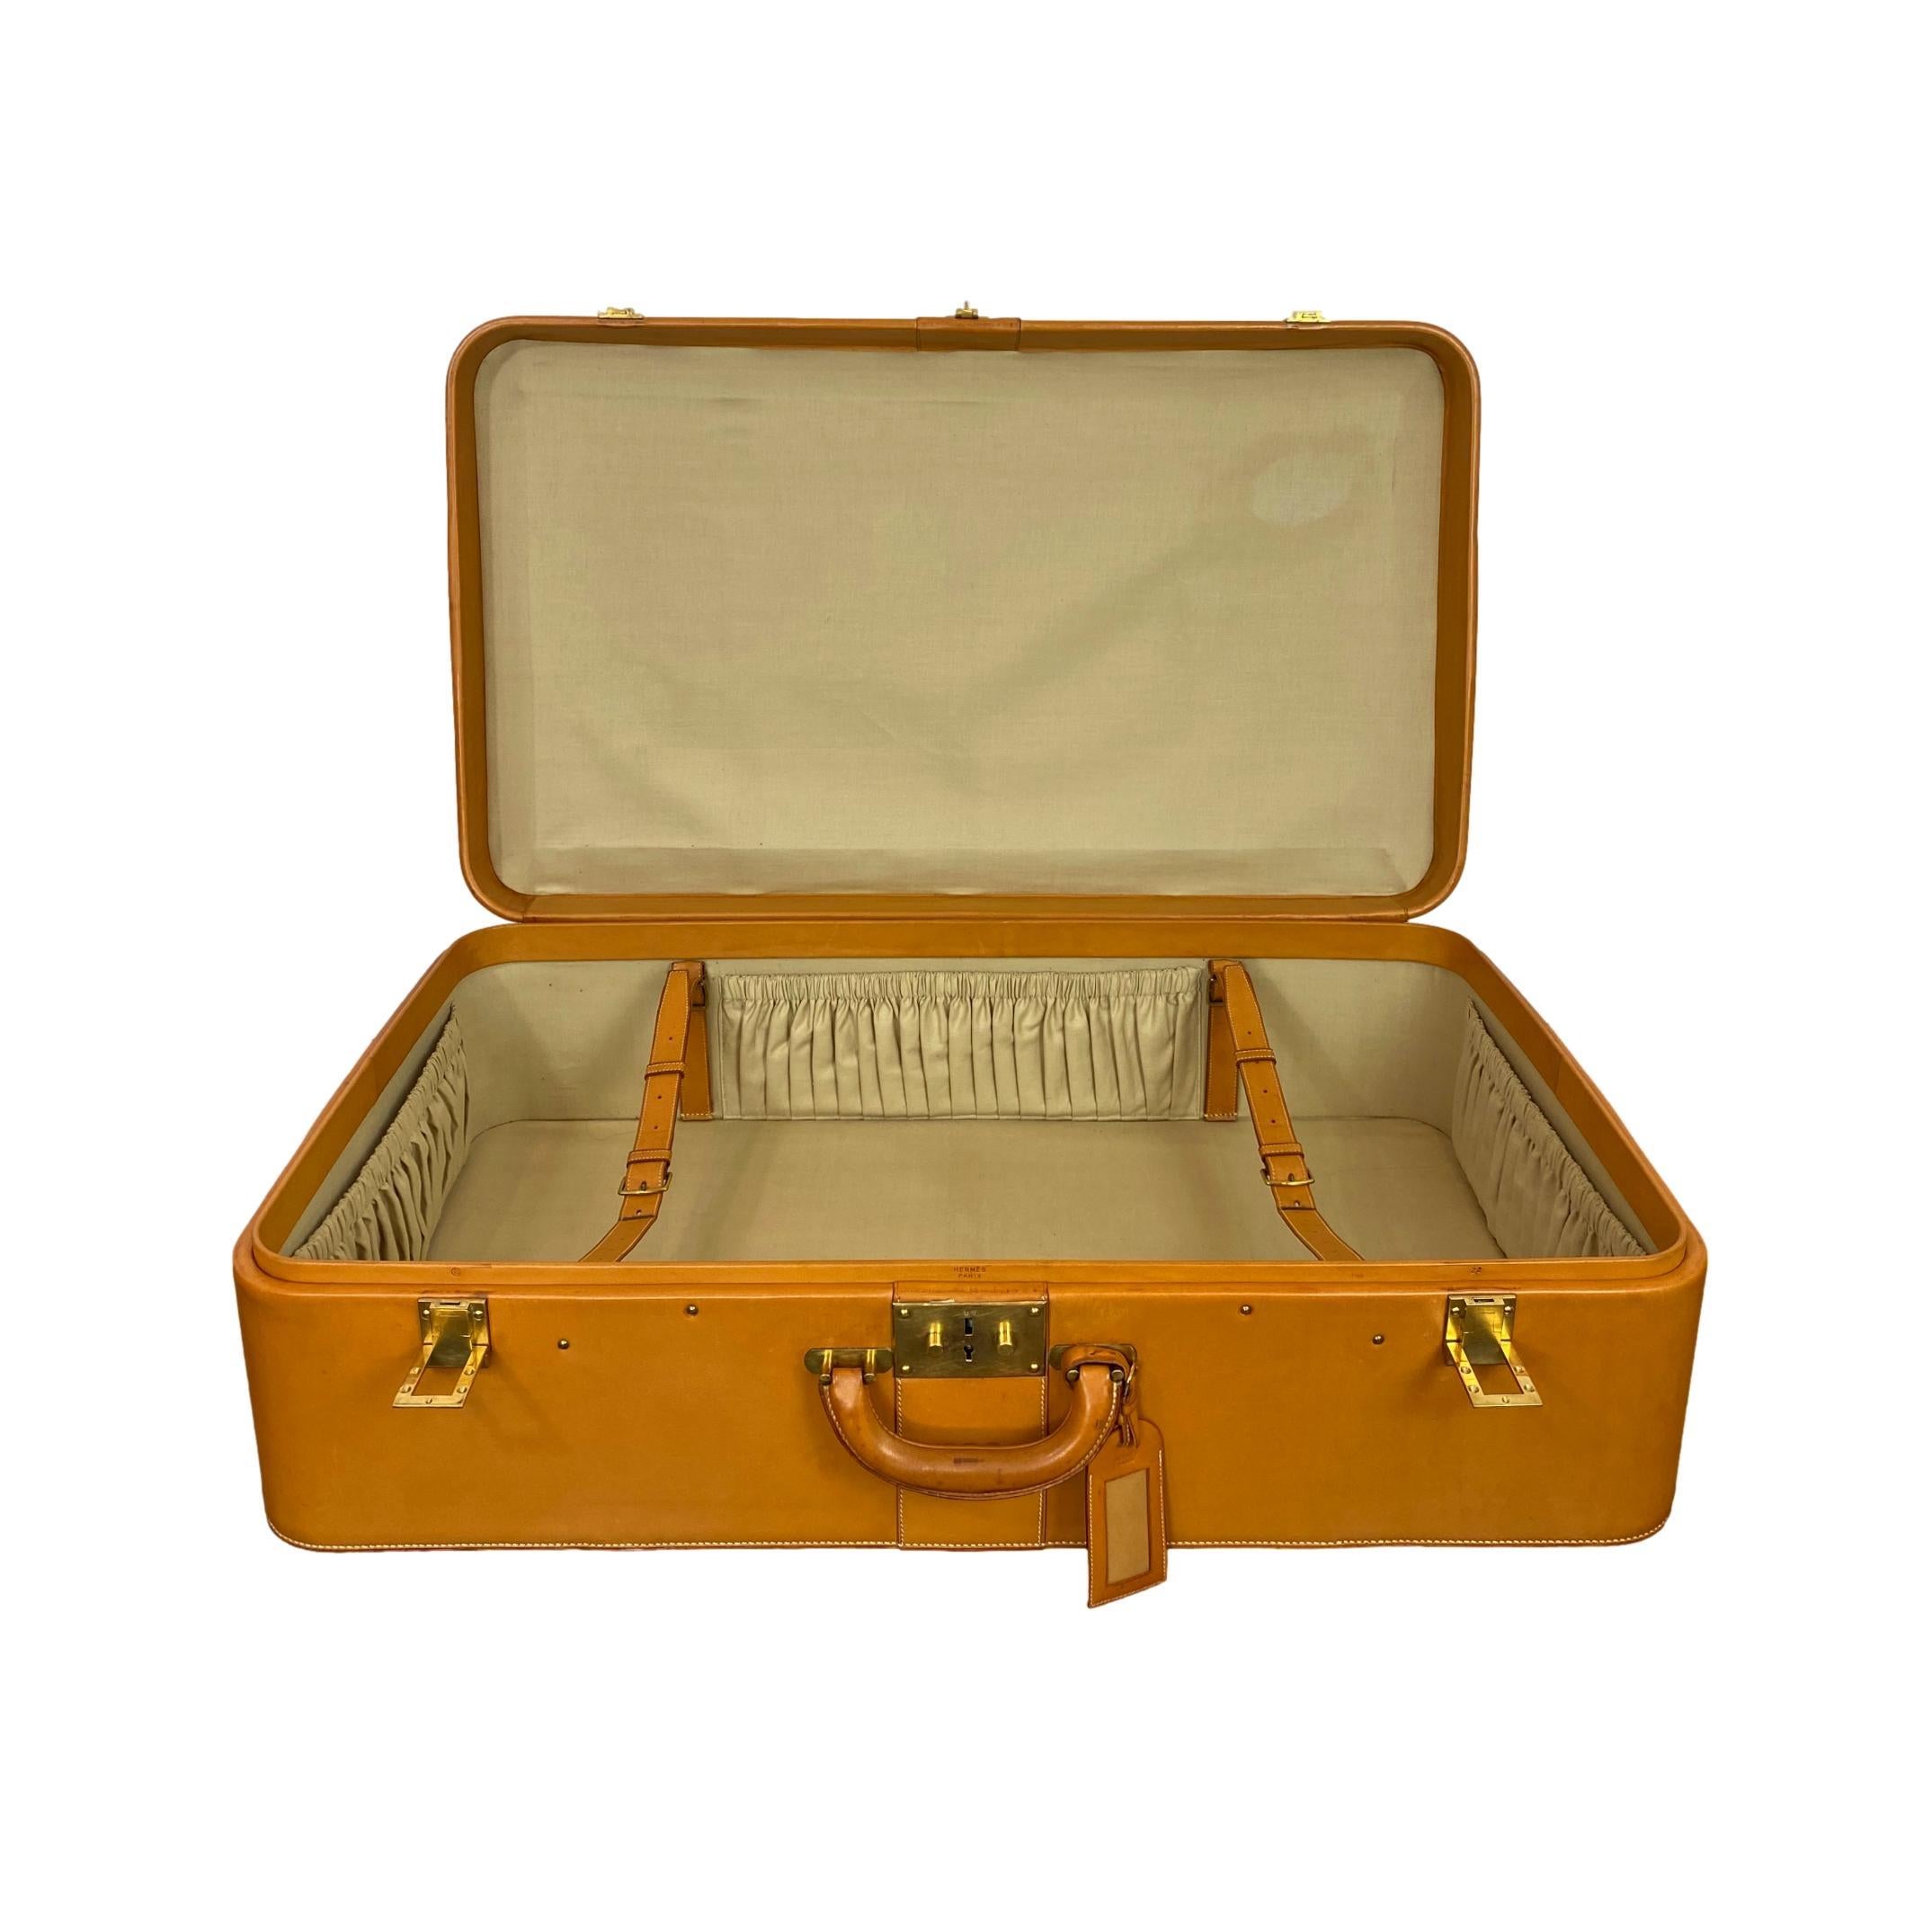 Hermès Vintage Automobile Valise Suitcase Travel Luggage, circa 1972. 3